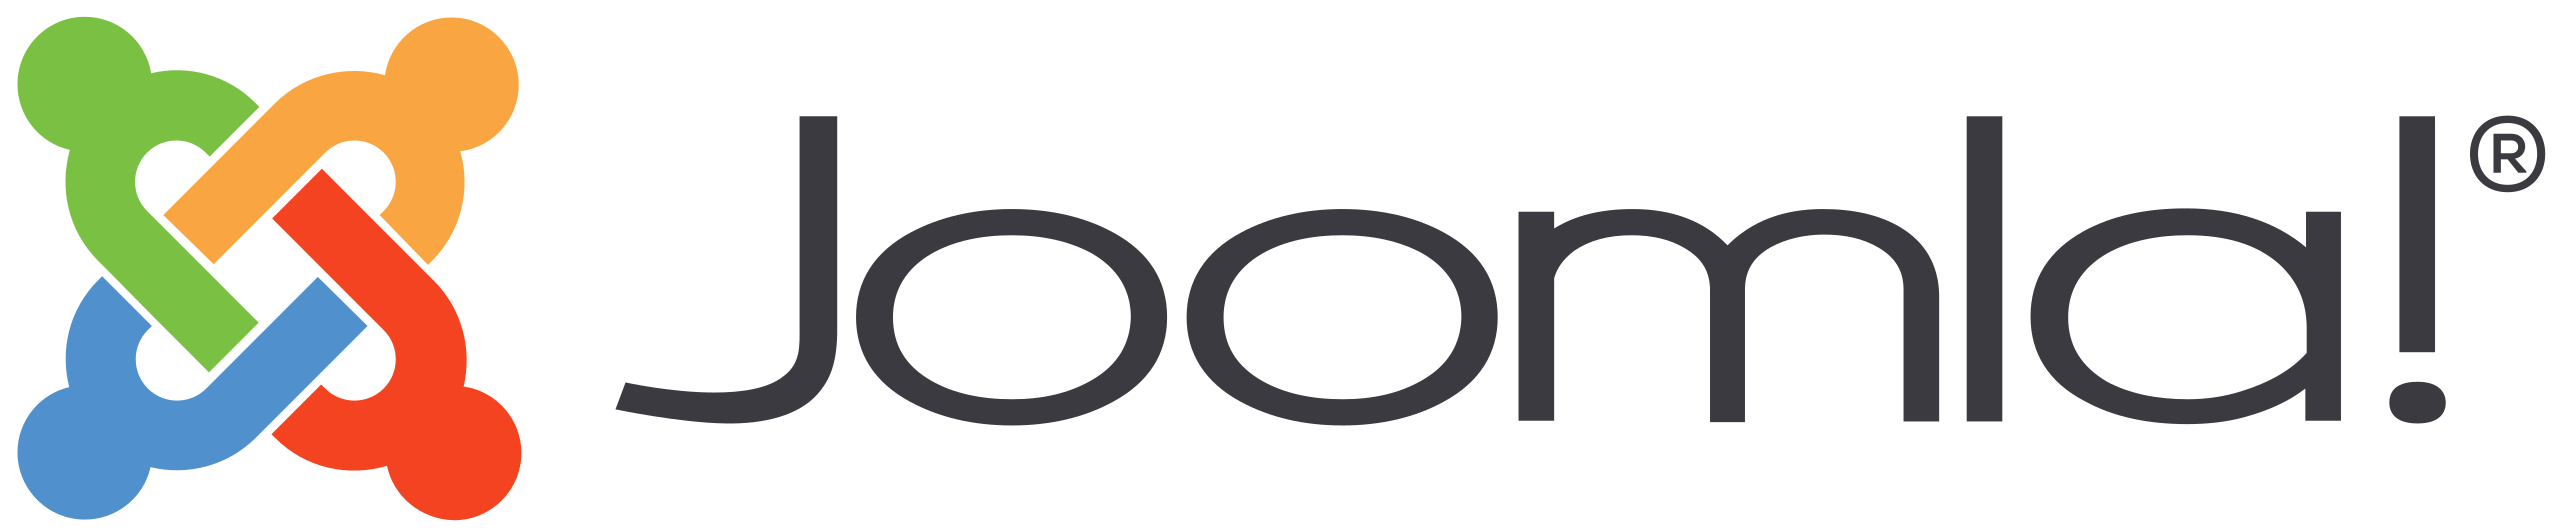 Joomla CMS logo